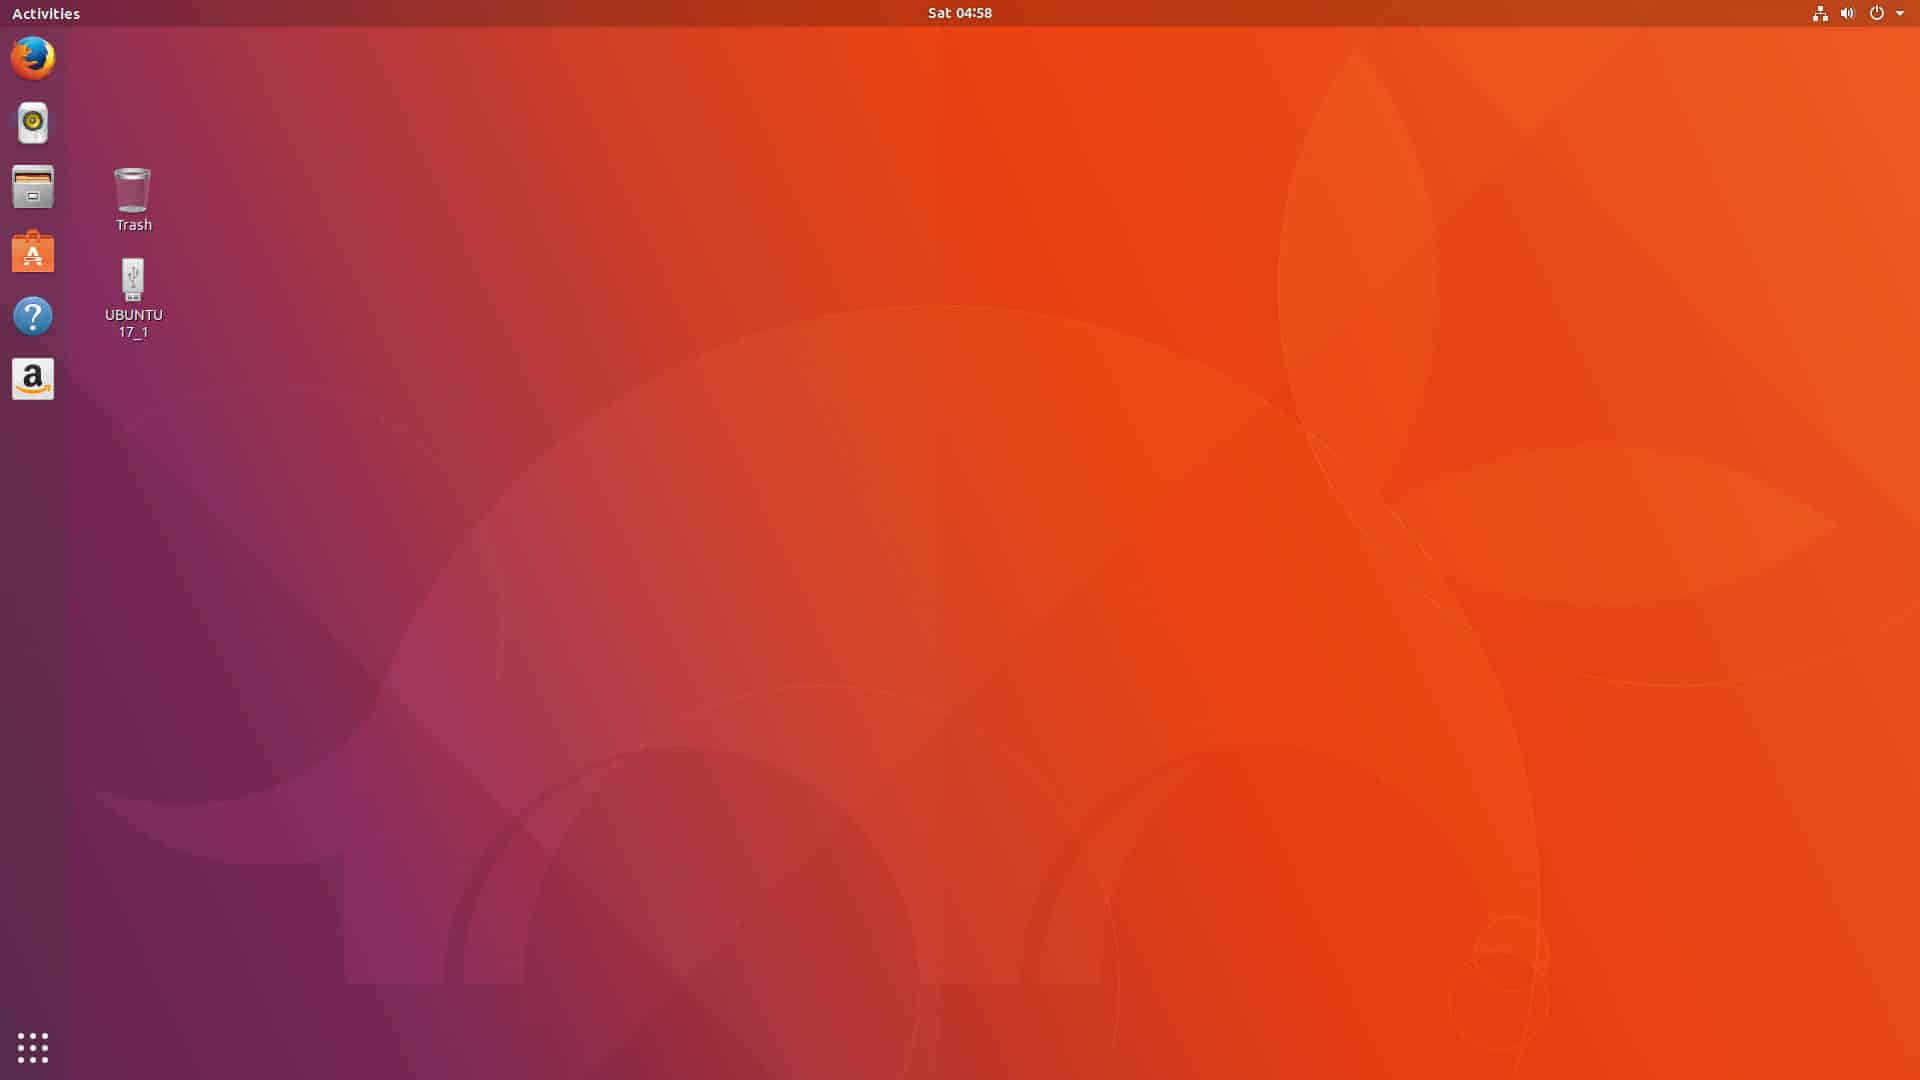 ubuntu image